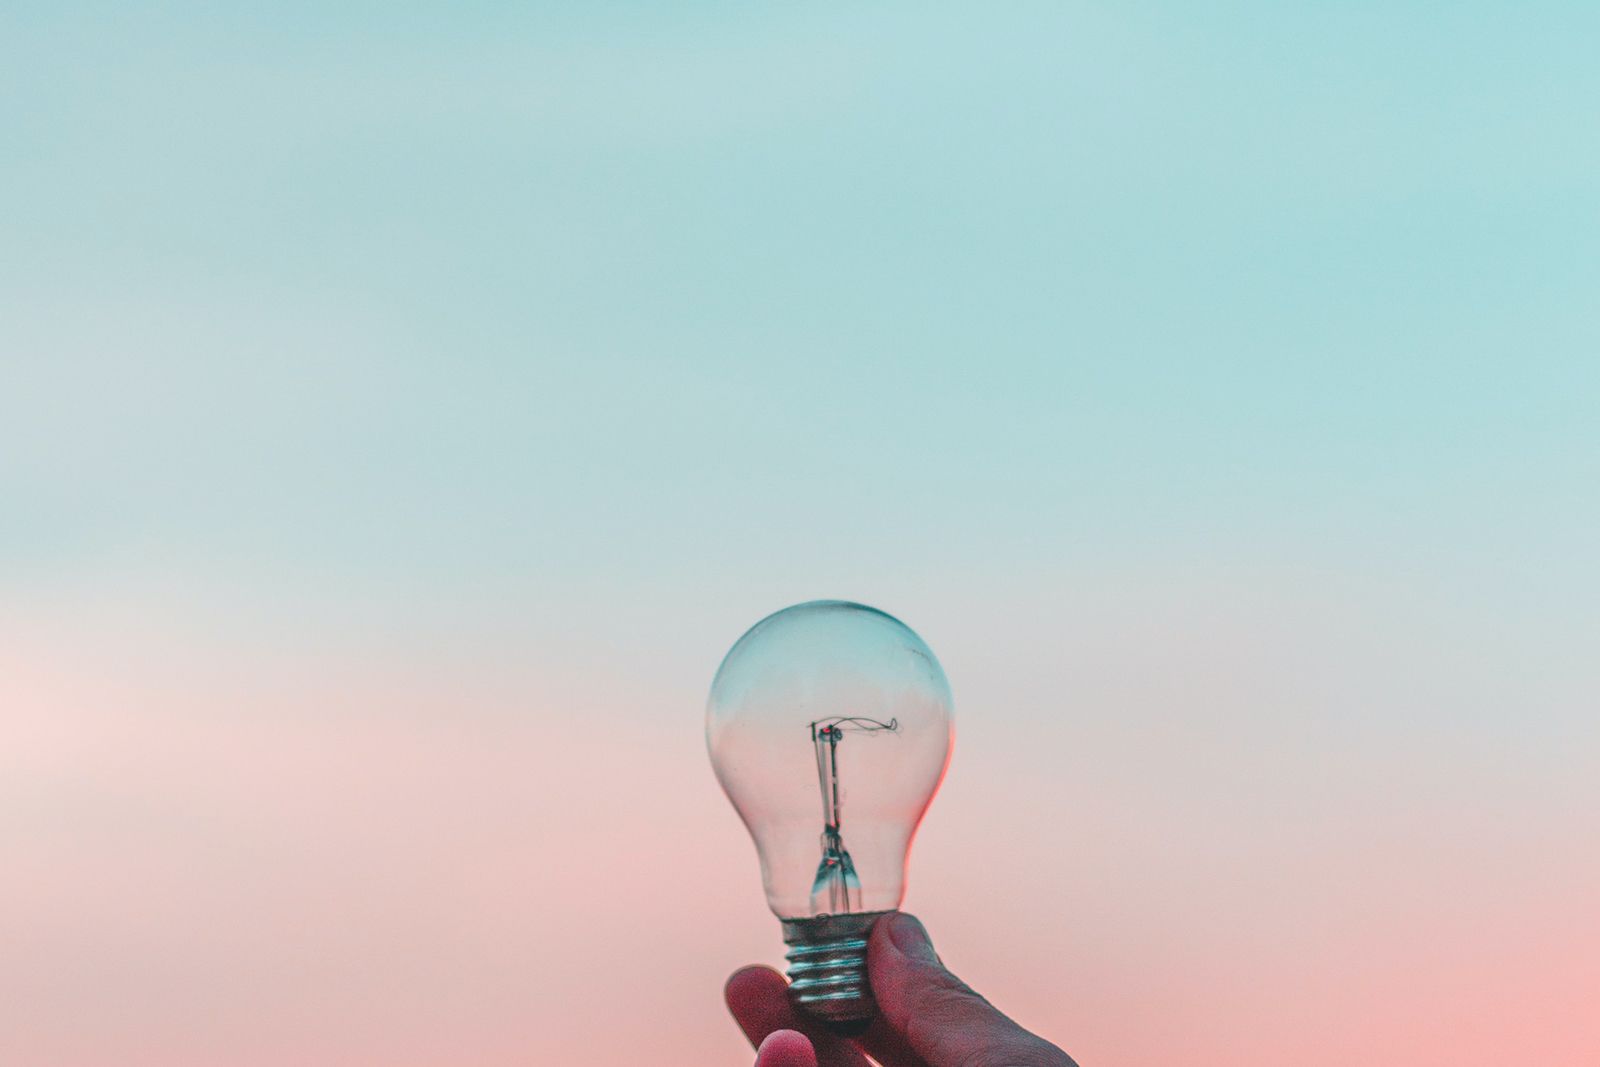 Image of a lightbulb - metaphor for innovation. 